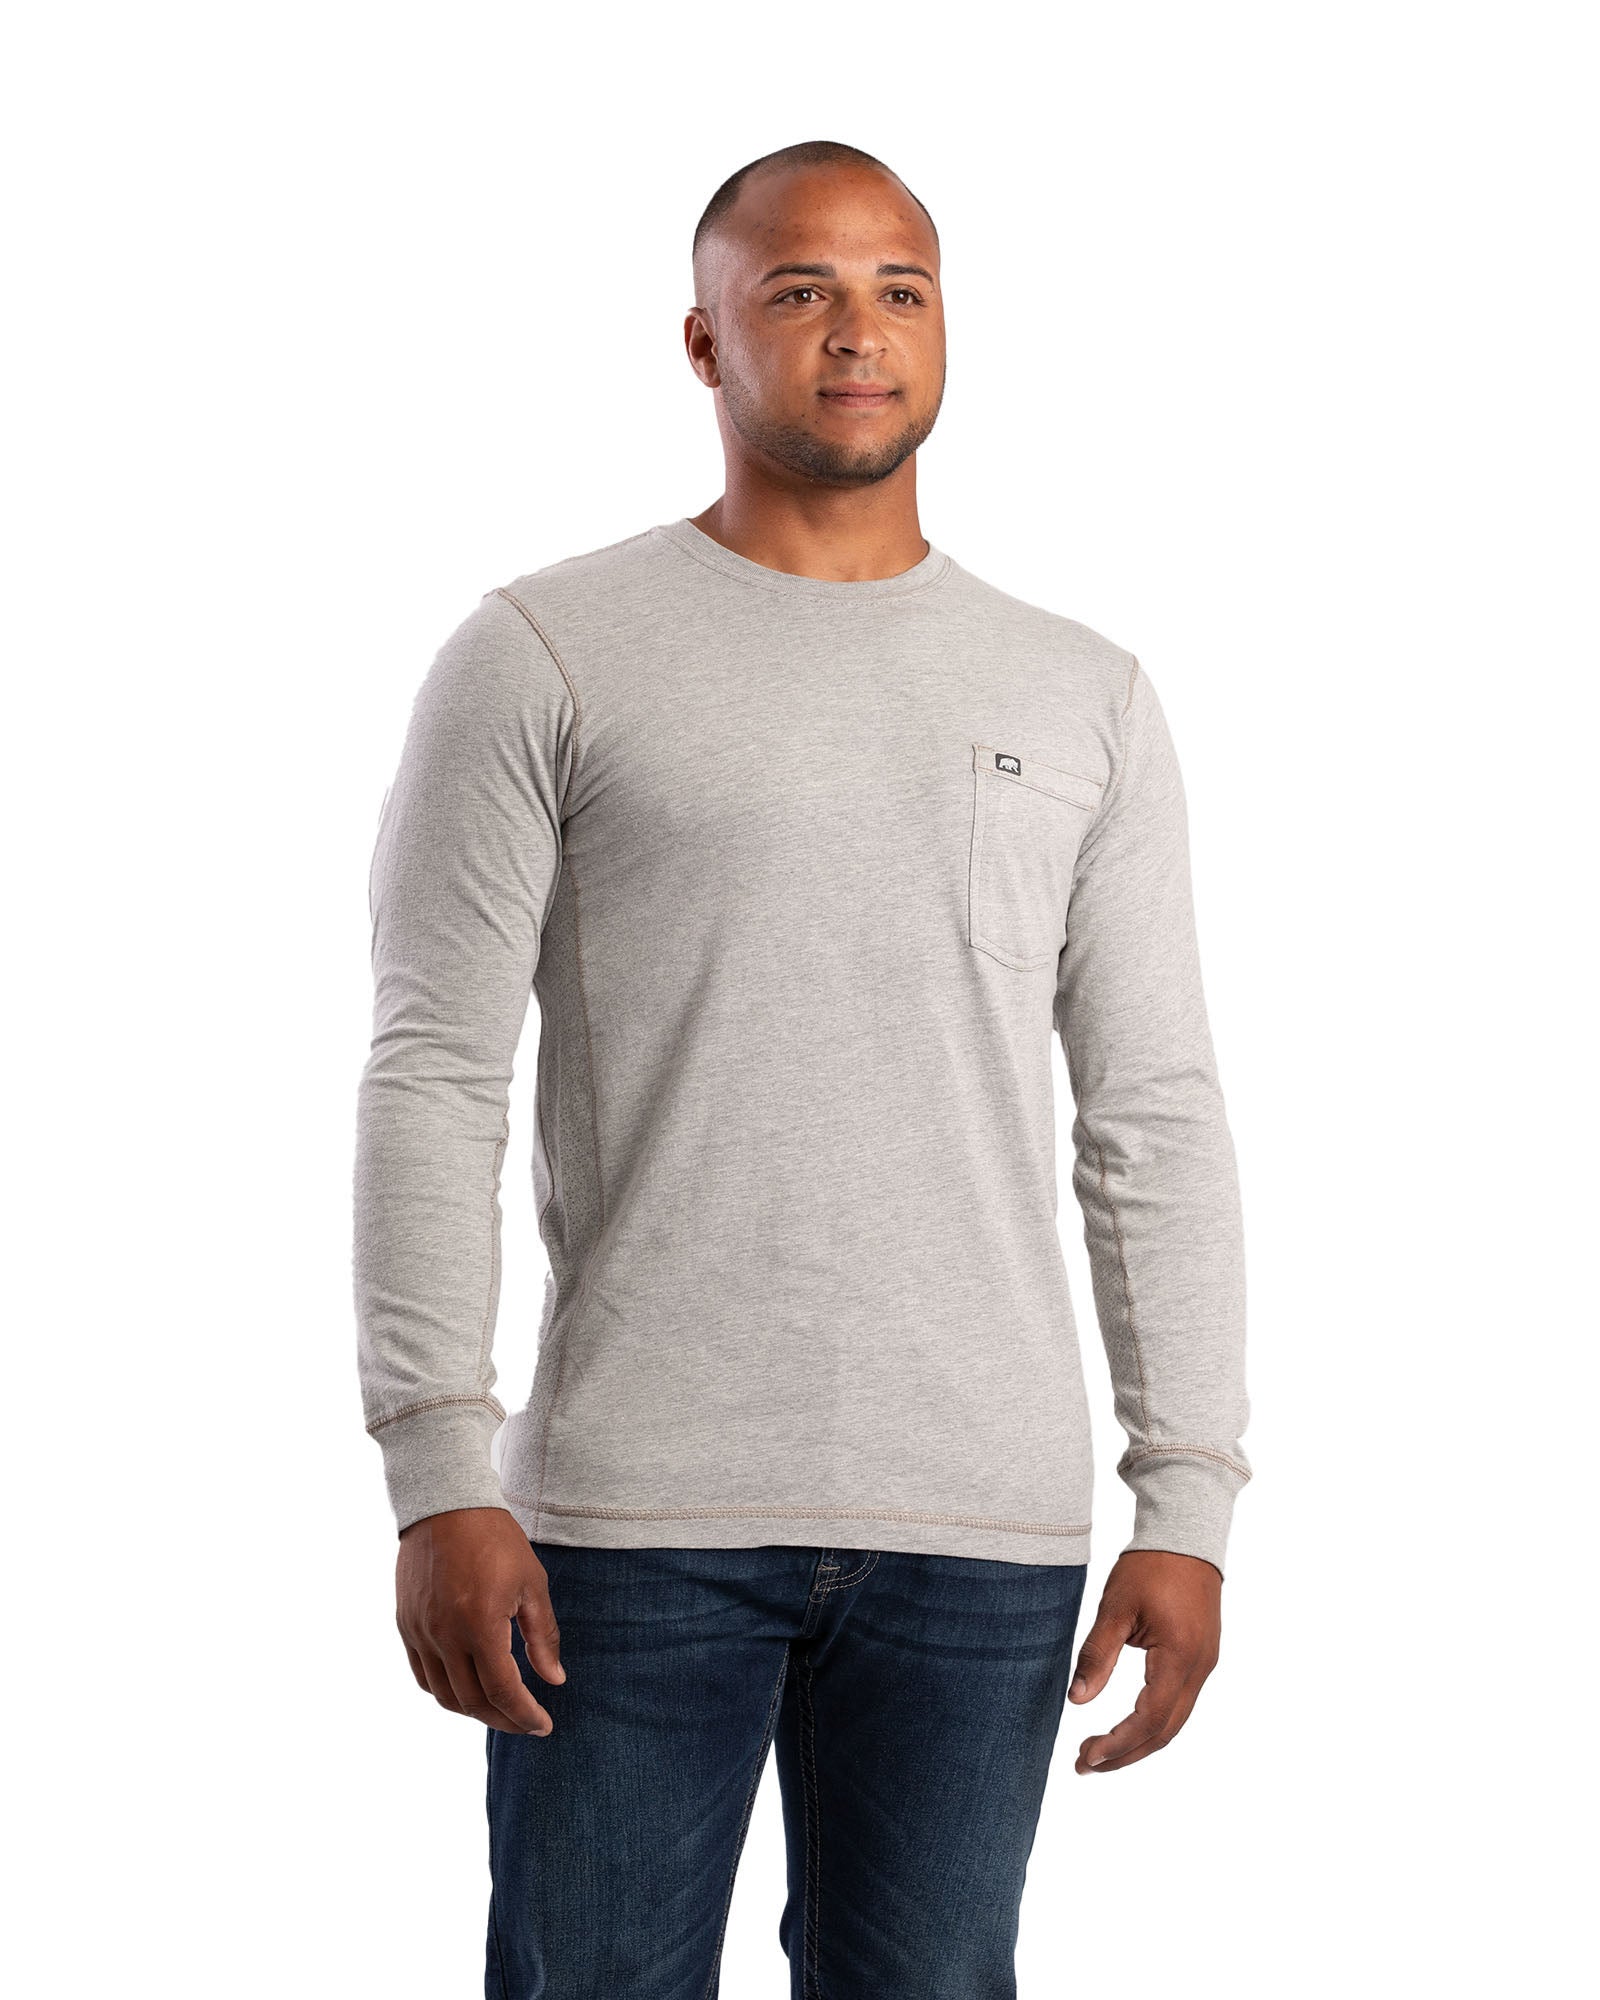 Namu Shop - ts(s) Mixed Color Cotton Round Flap Pocket Baggy Shirt - Gray